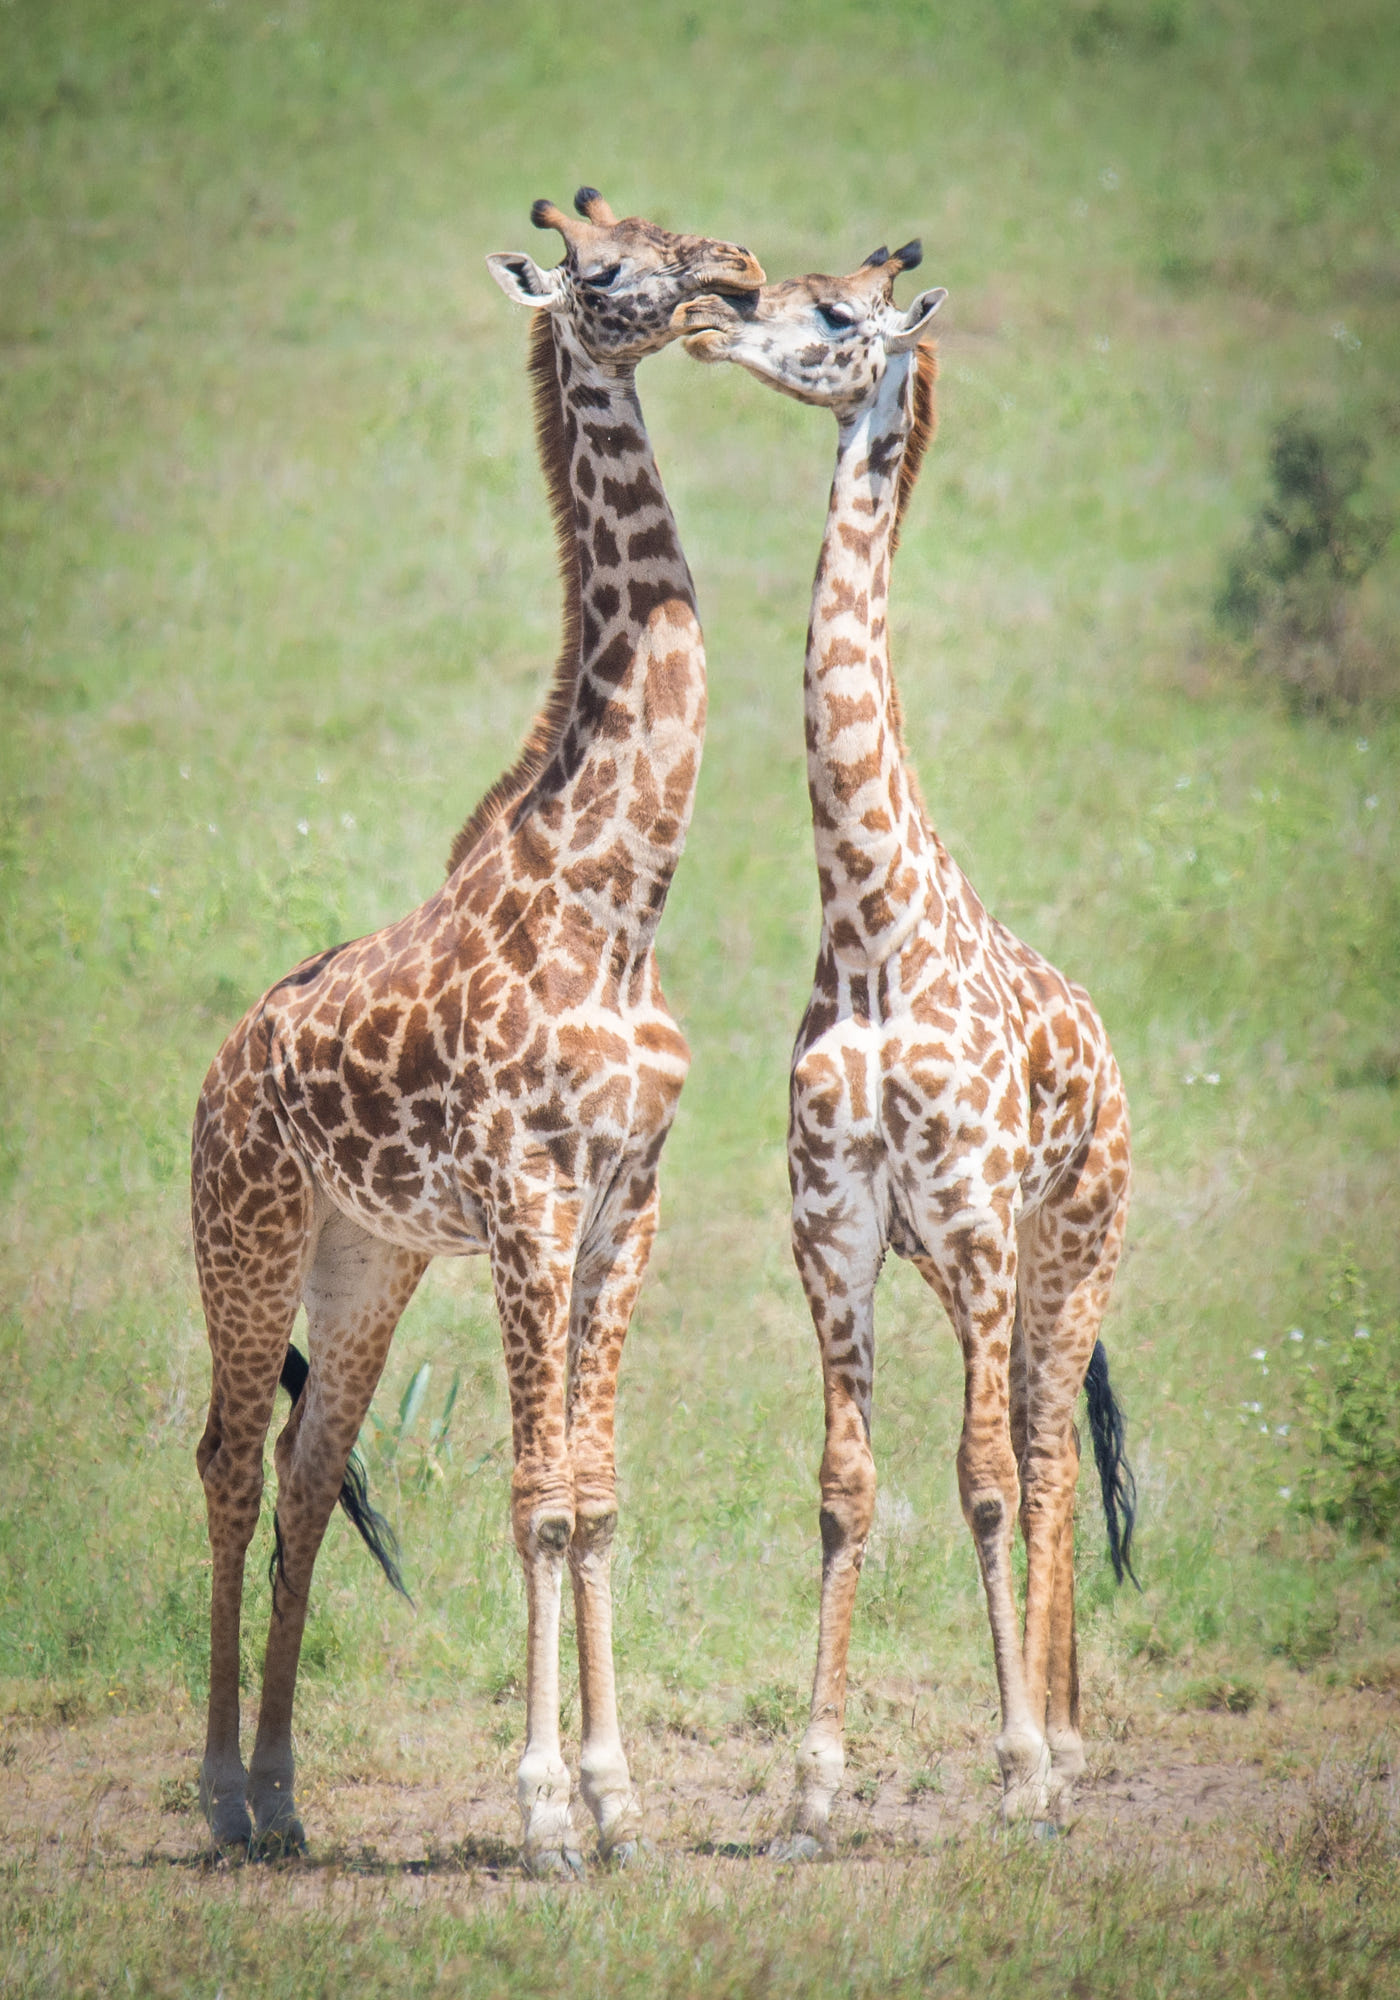 A cute giraffe couple cuddling. Photo taken during a safari in Kenya ...